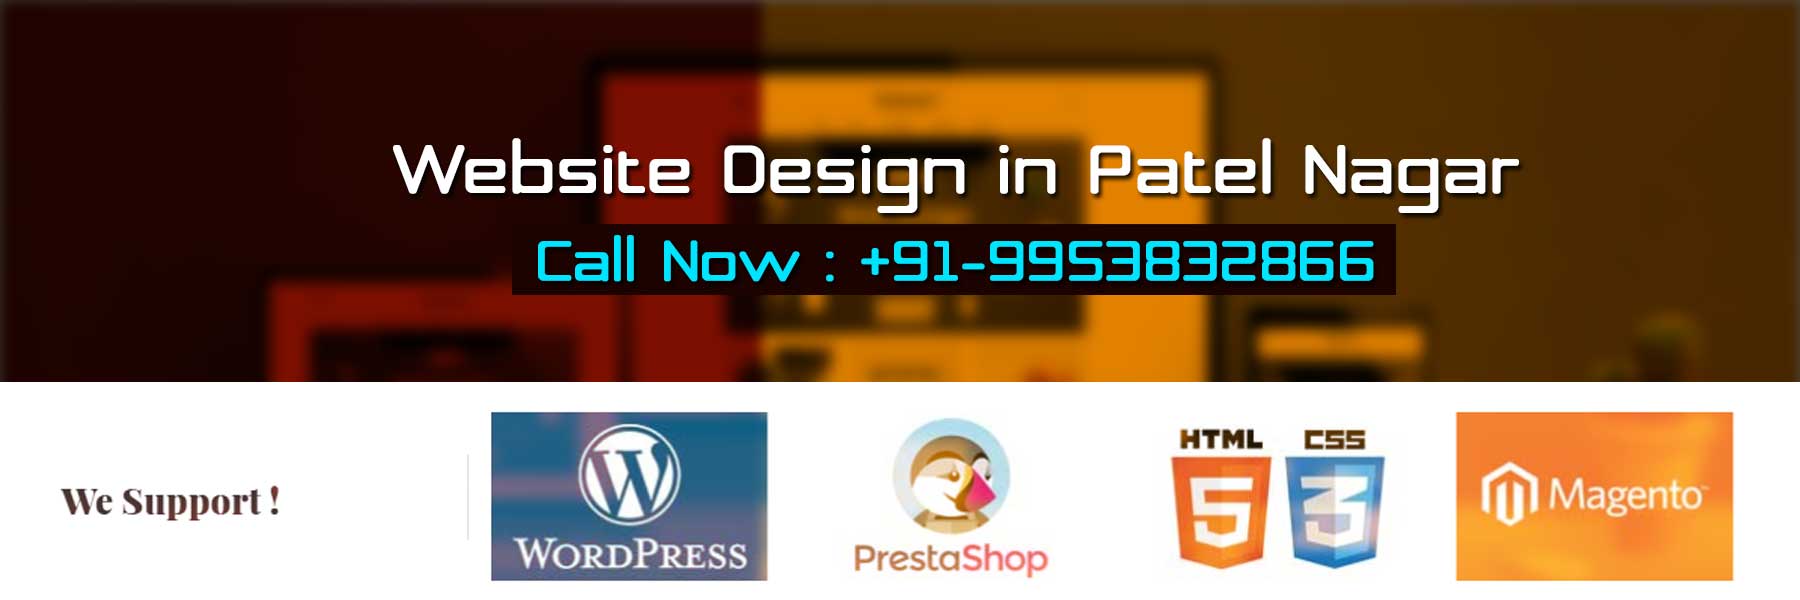 Website Design in Patel Nagar